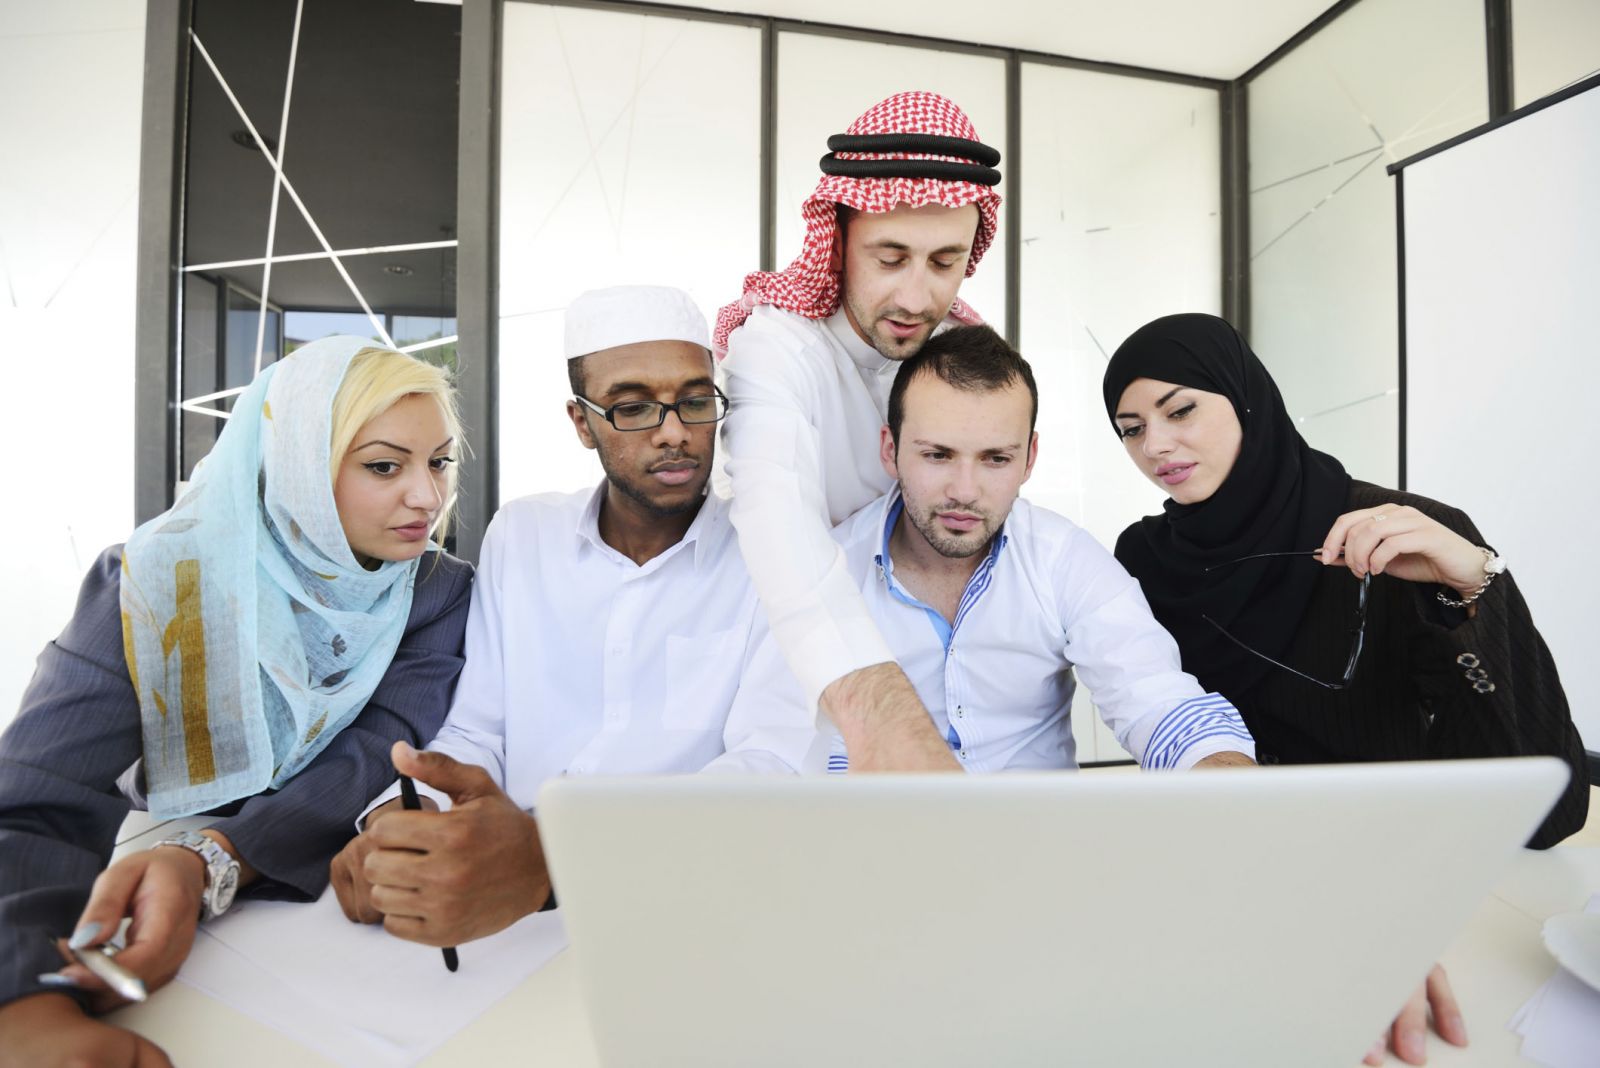 Diverse workforce in Gulf countries